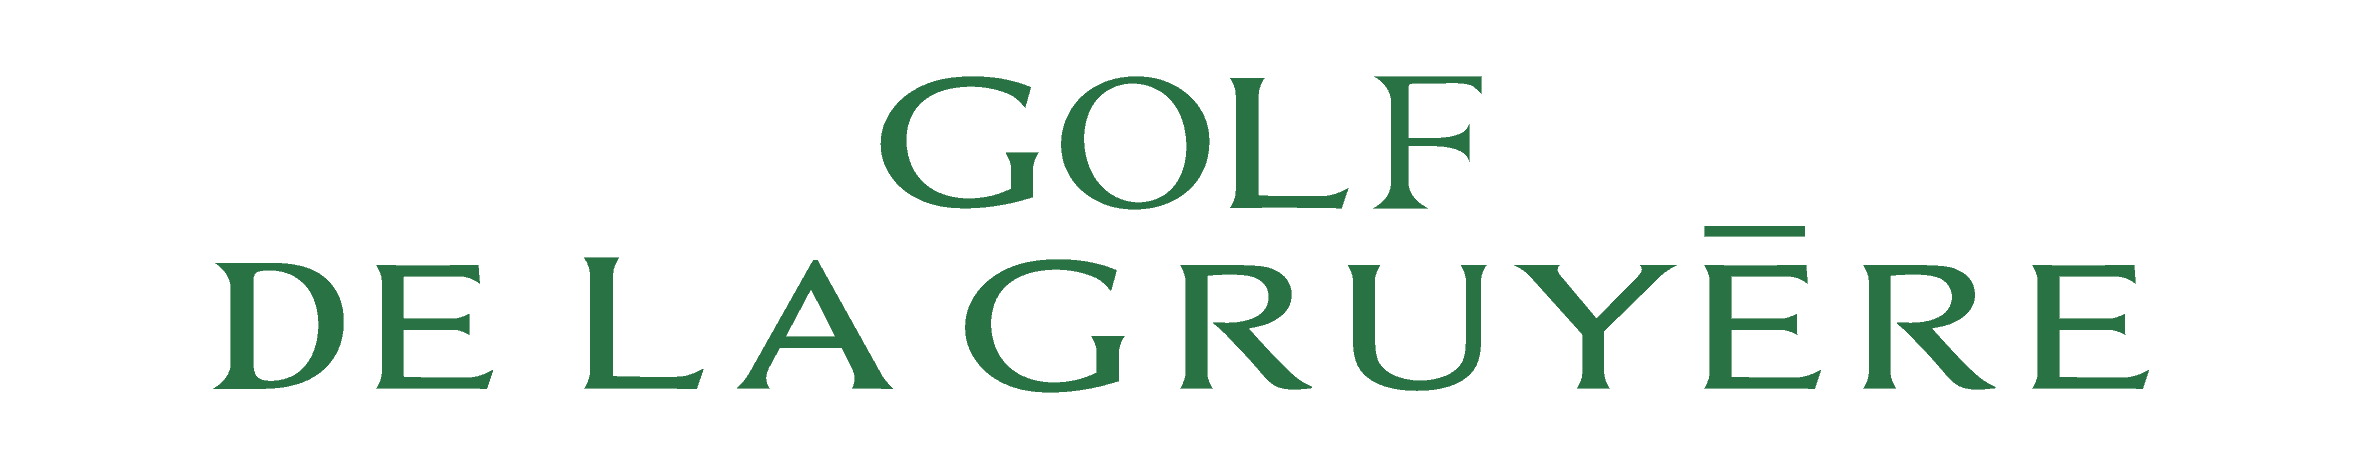 GreenClub-by-GolfersPages-Golf-de-la-Gruyere-logo